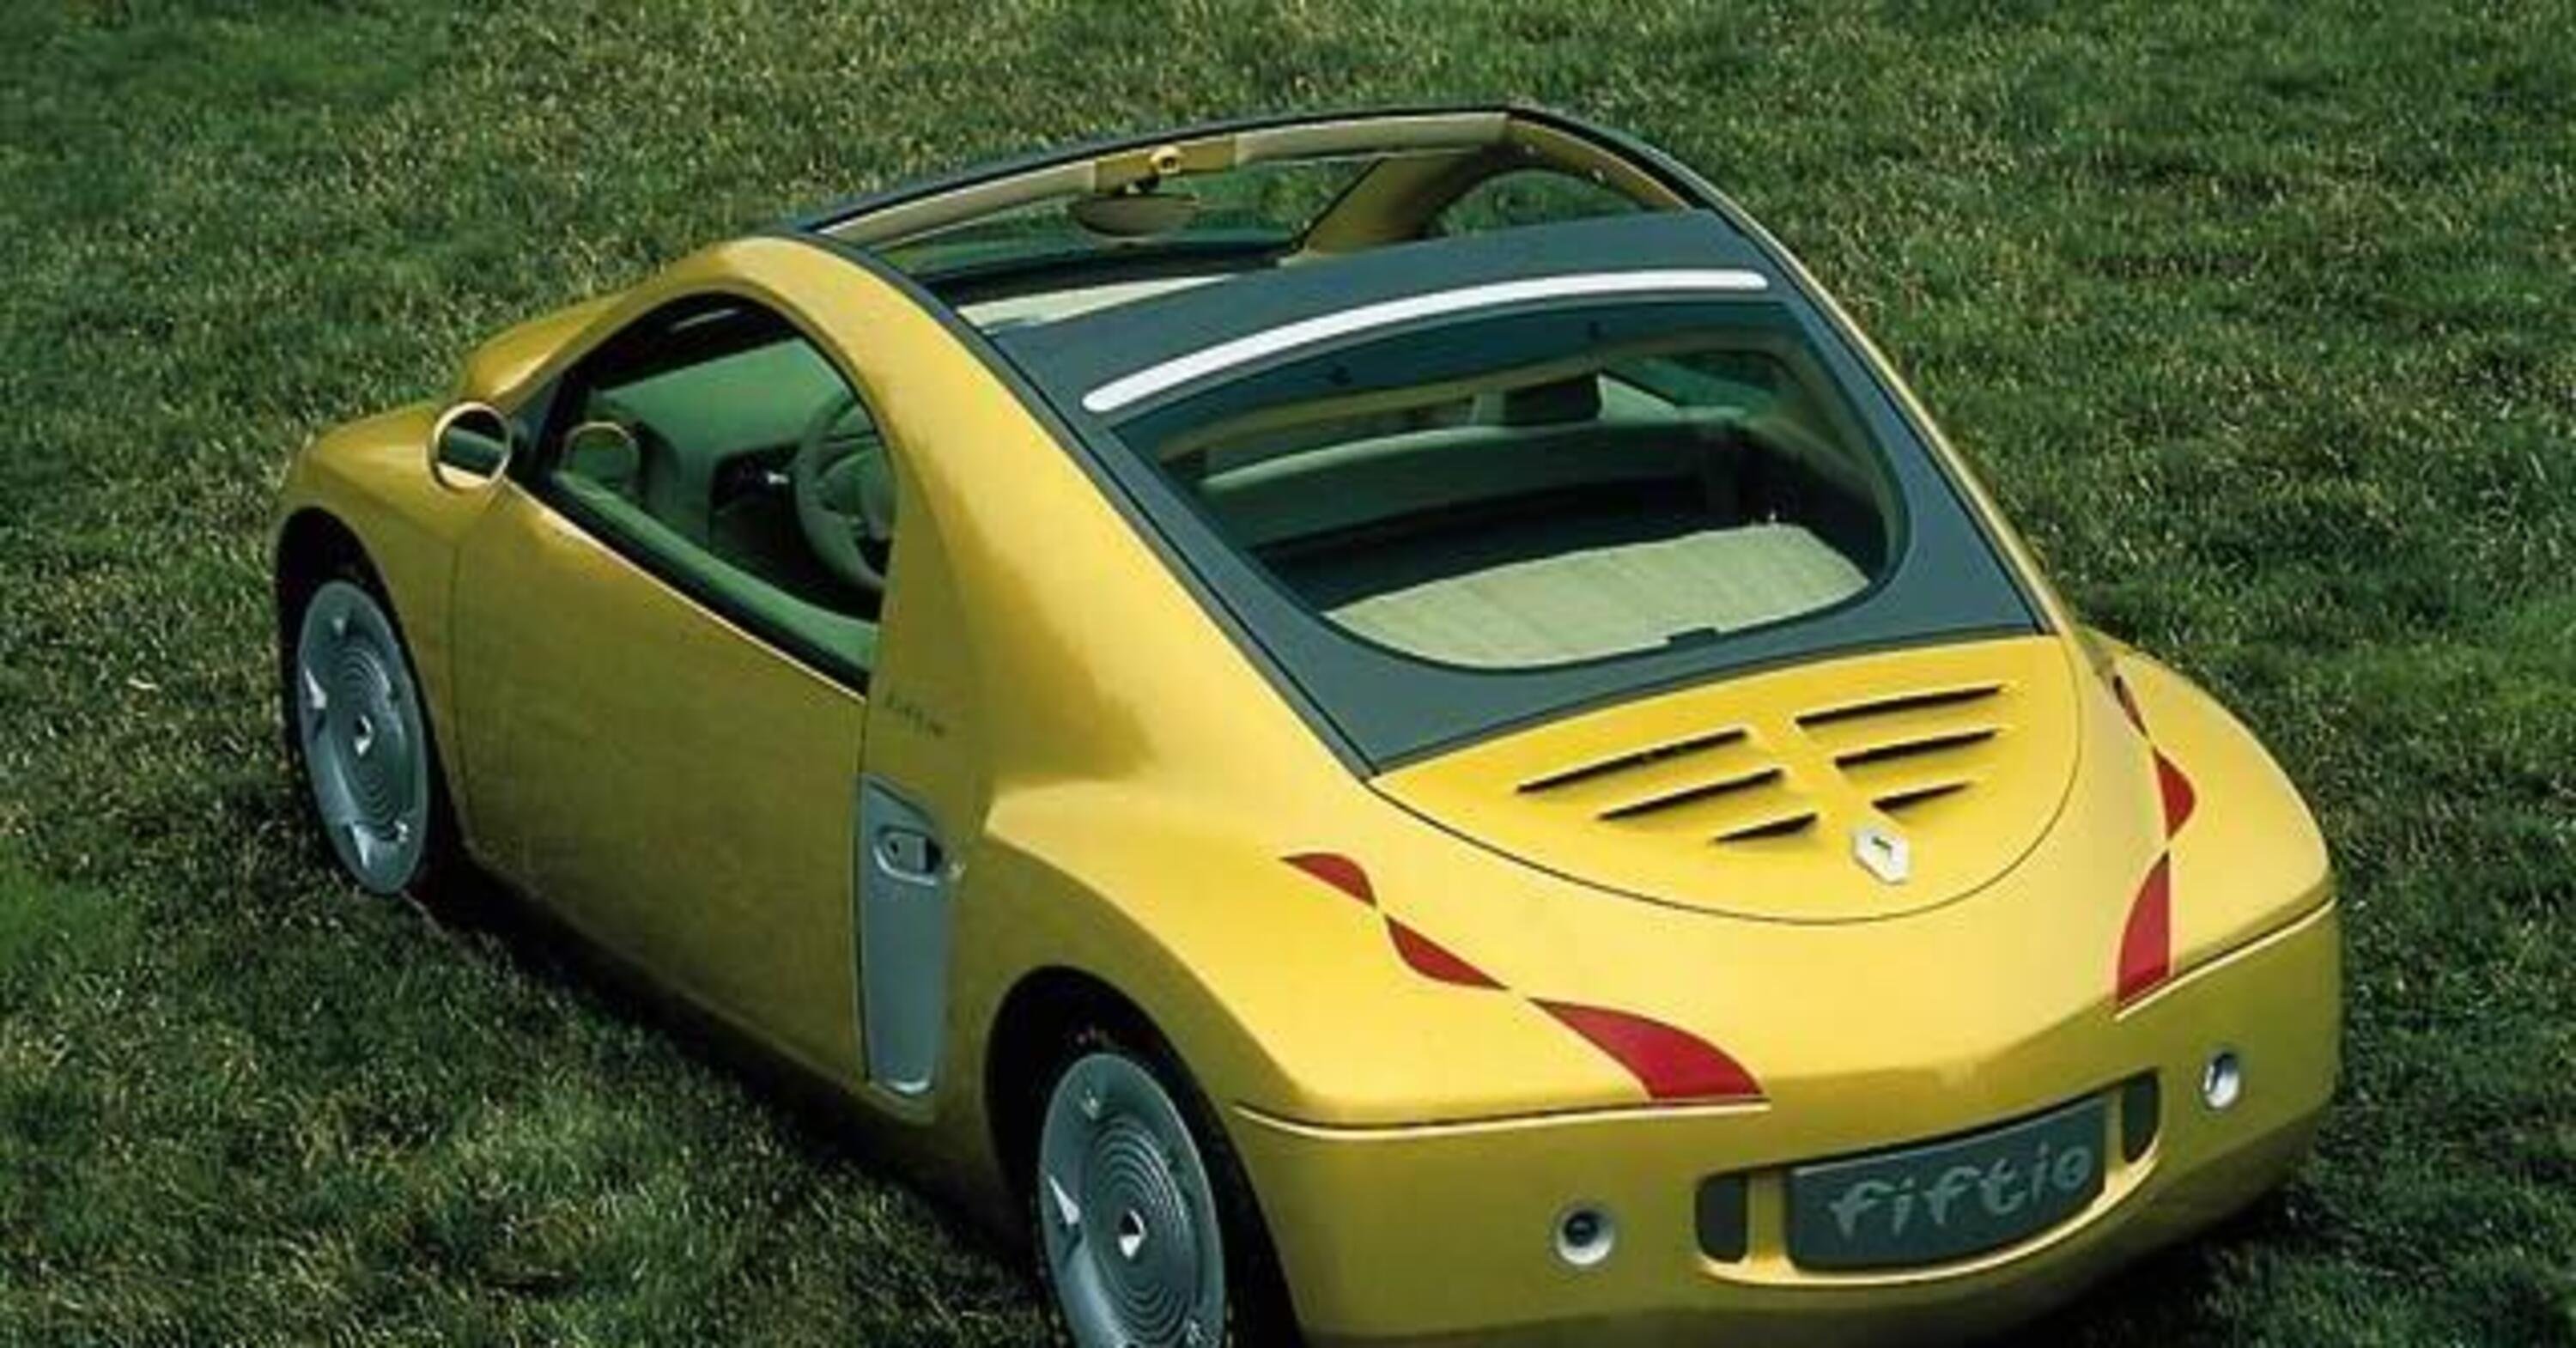 Novit&agrave; auto mancate a listino, Renault: 5 concept-car francesi che pochi ricordano